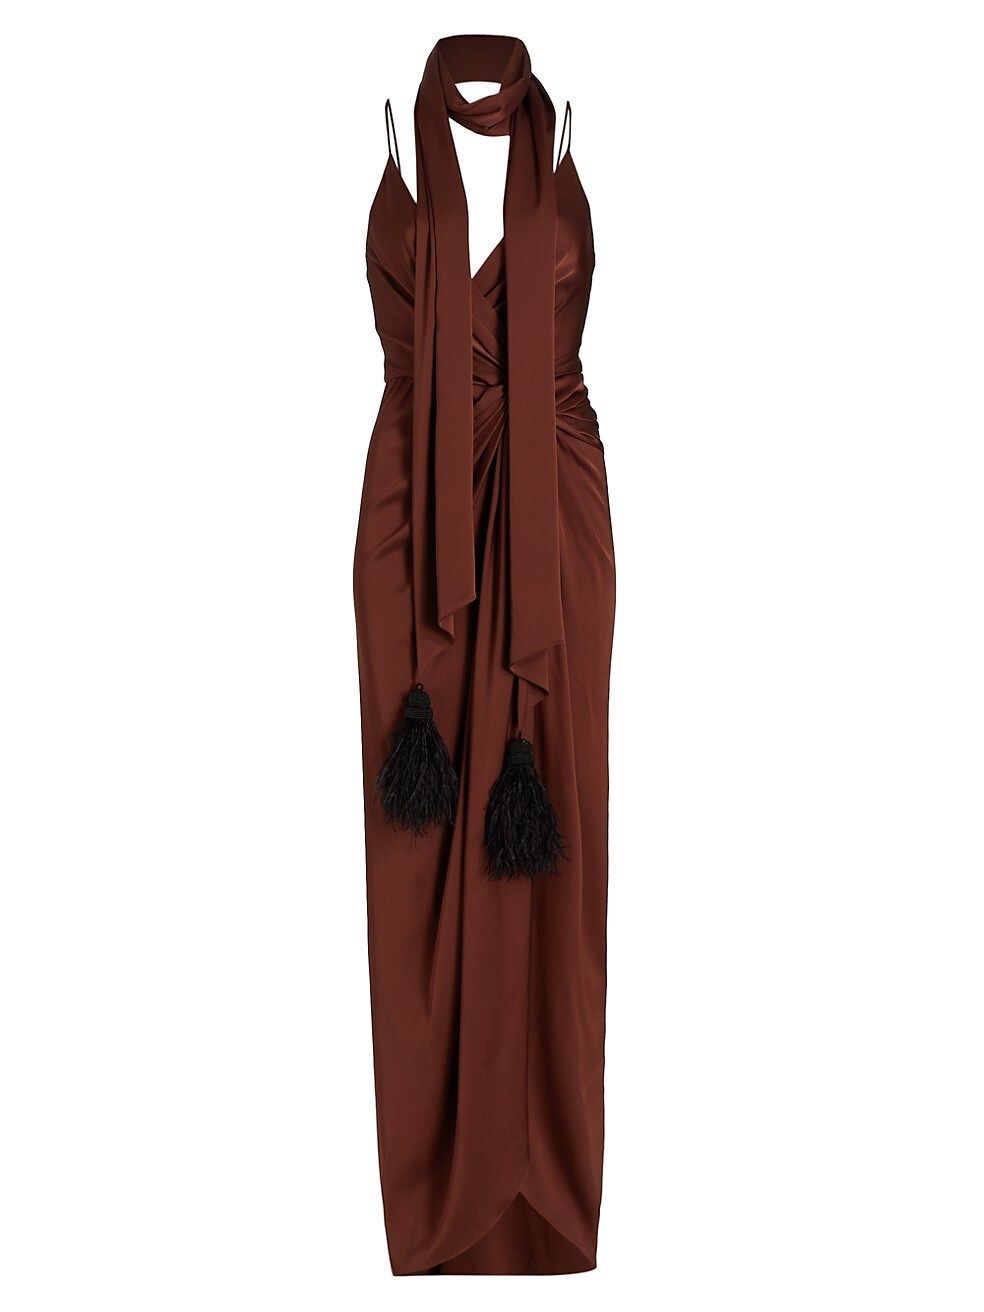 Firmament Maxi-Dress | Saks Fifth Avenue